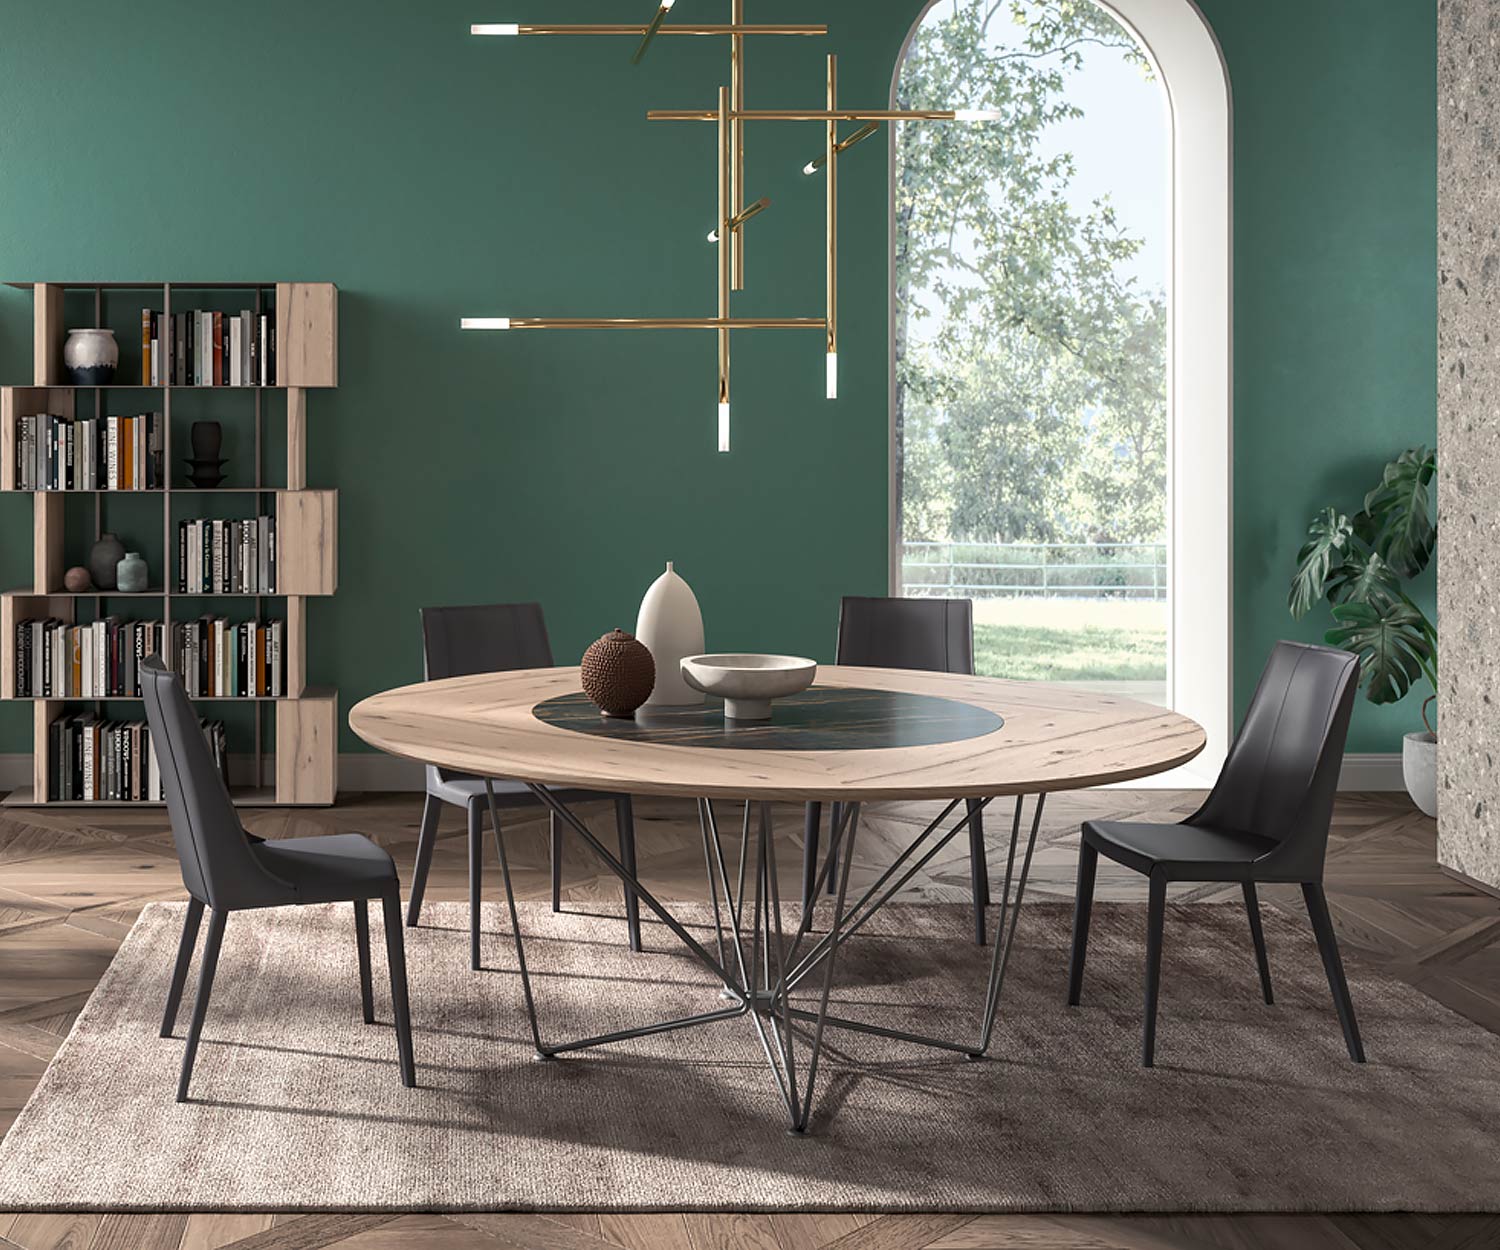 Ozzio Design leather dining chair Loren S337 in smooth leather dark grey